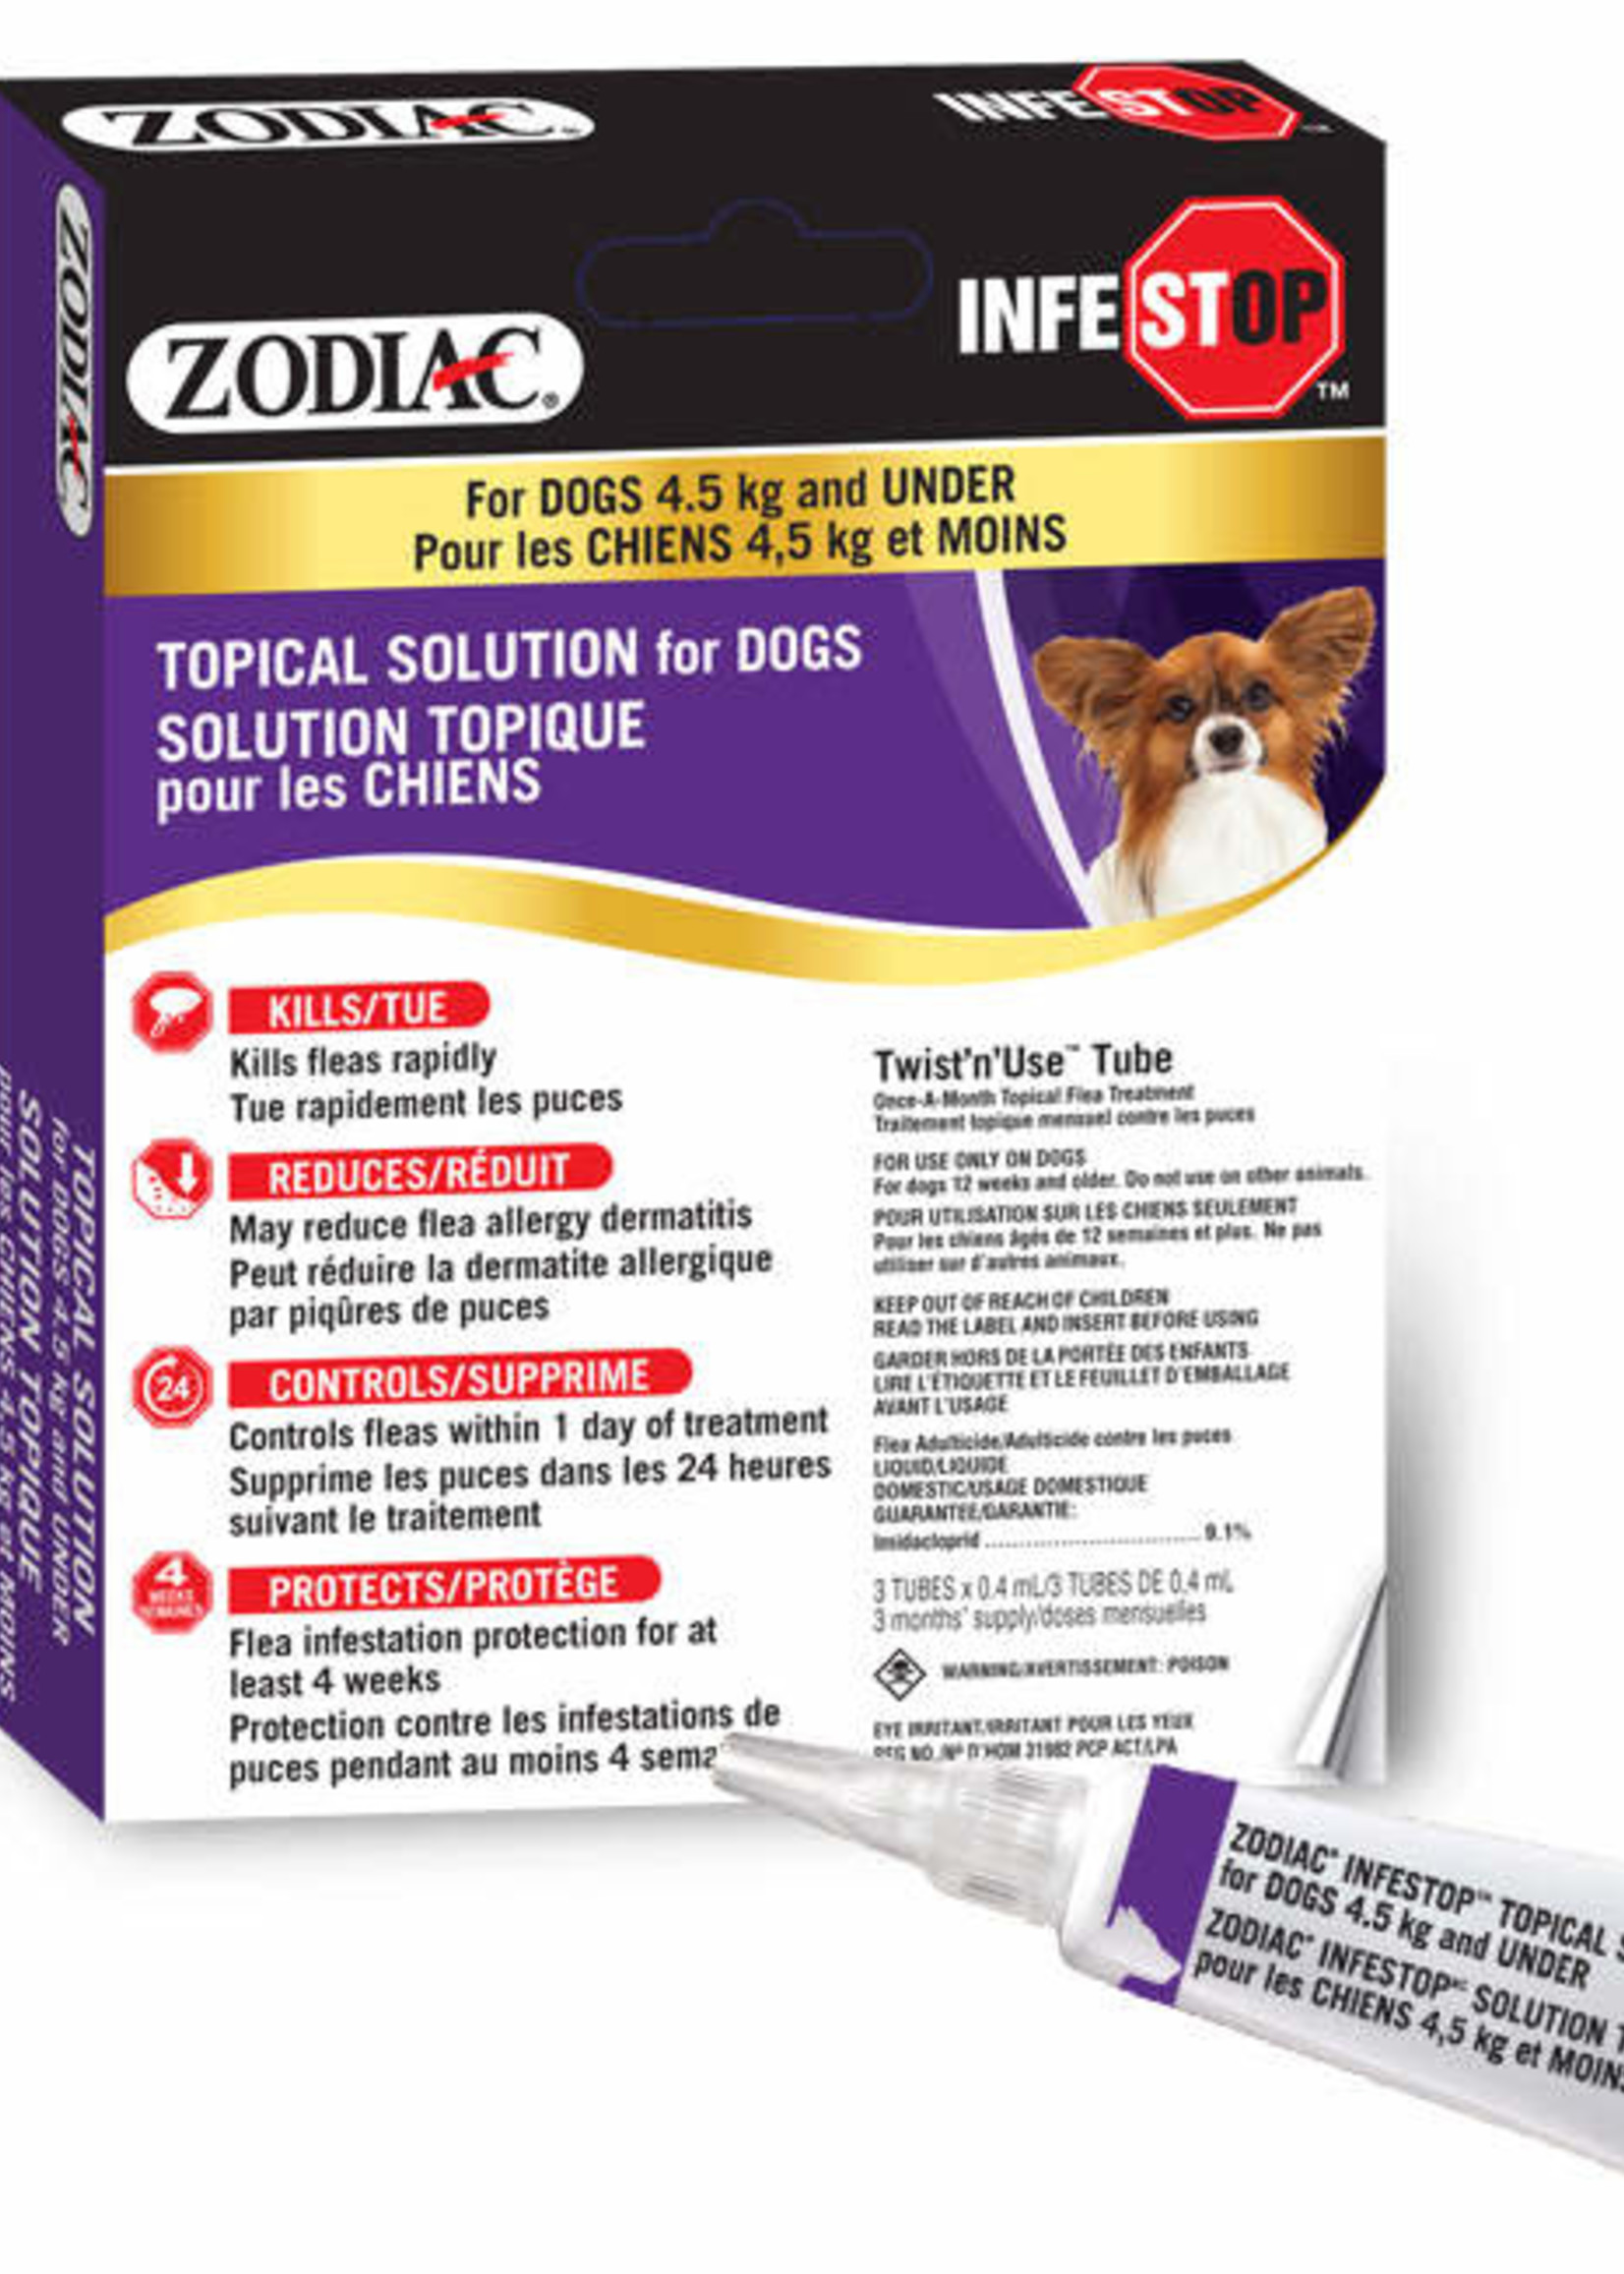 Zodiac® Zodiac® Infestop™ for Dogs 4.5kG and Under